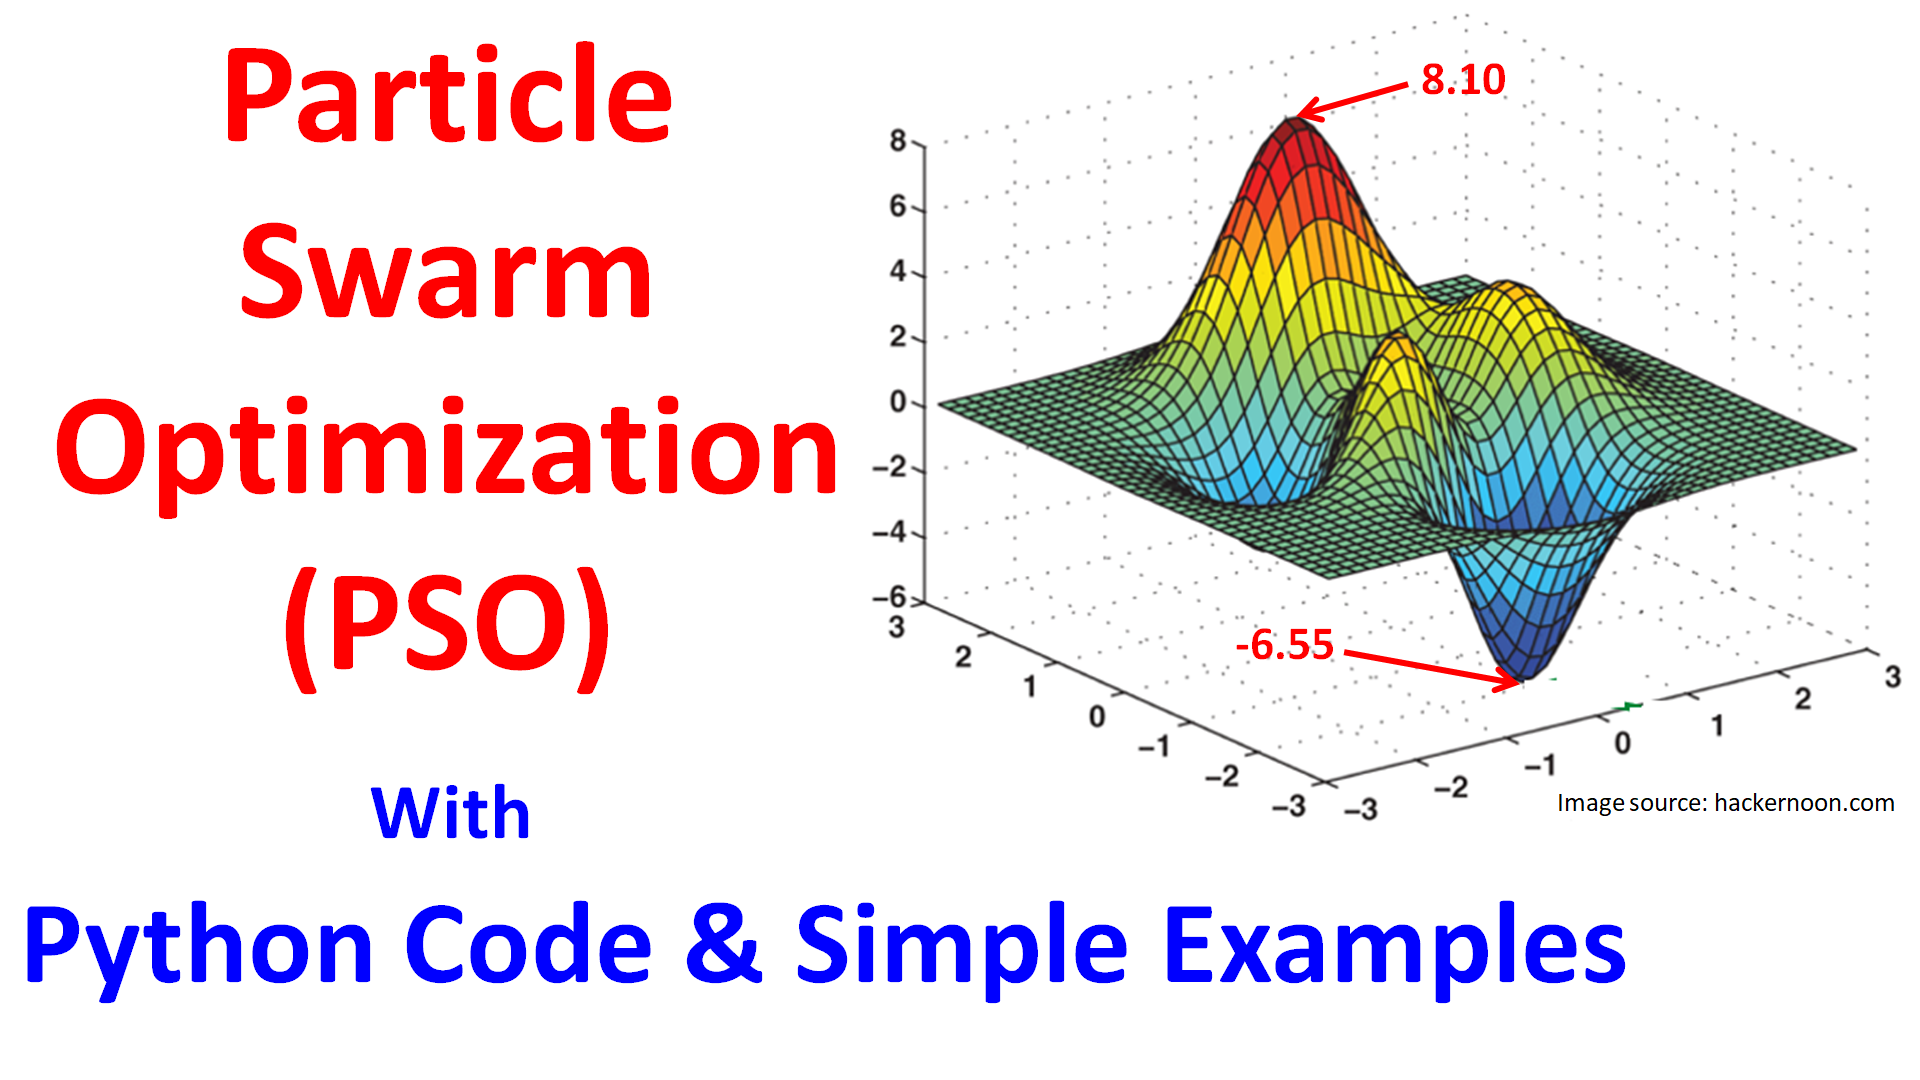 Python Code of Particle Swarm Optimization (PSO) Algorithm